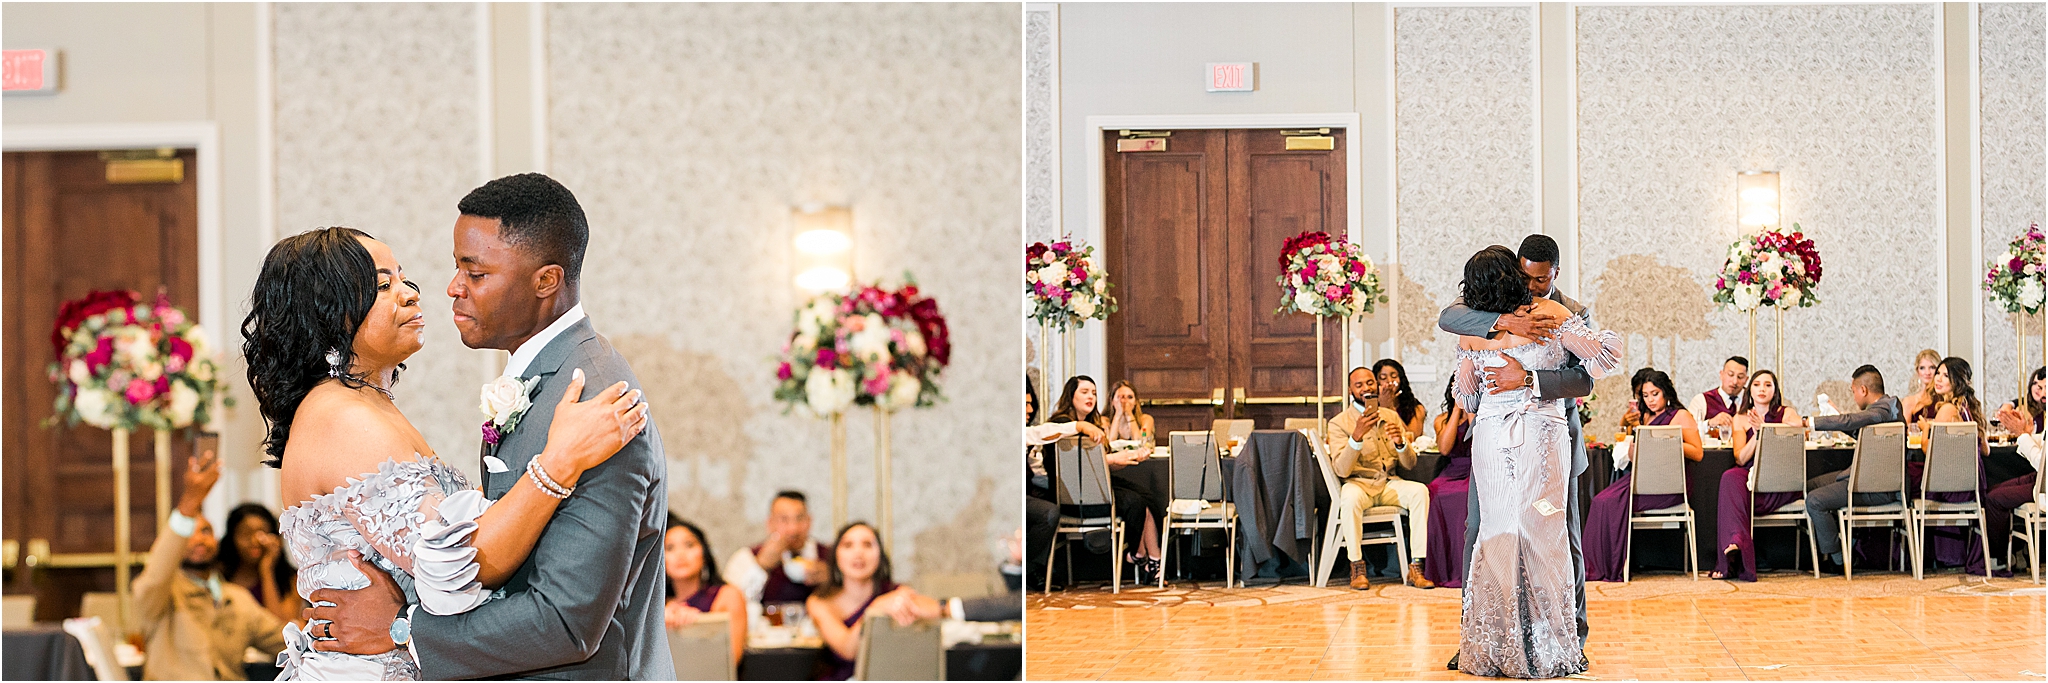 Wedding Reception in McKinney, Texas by North Texas Wedding Photographer Jillian Hogan Photography